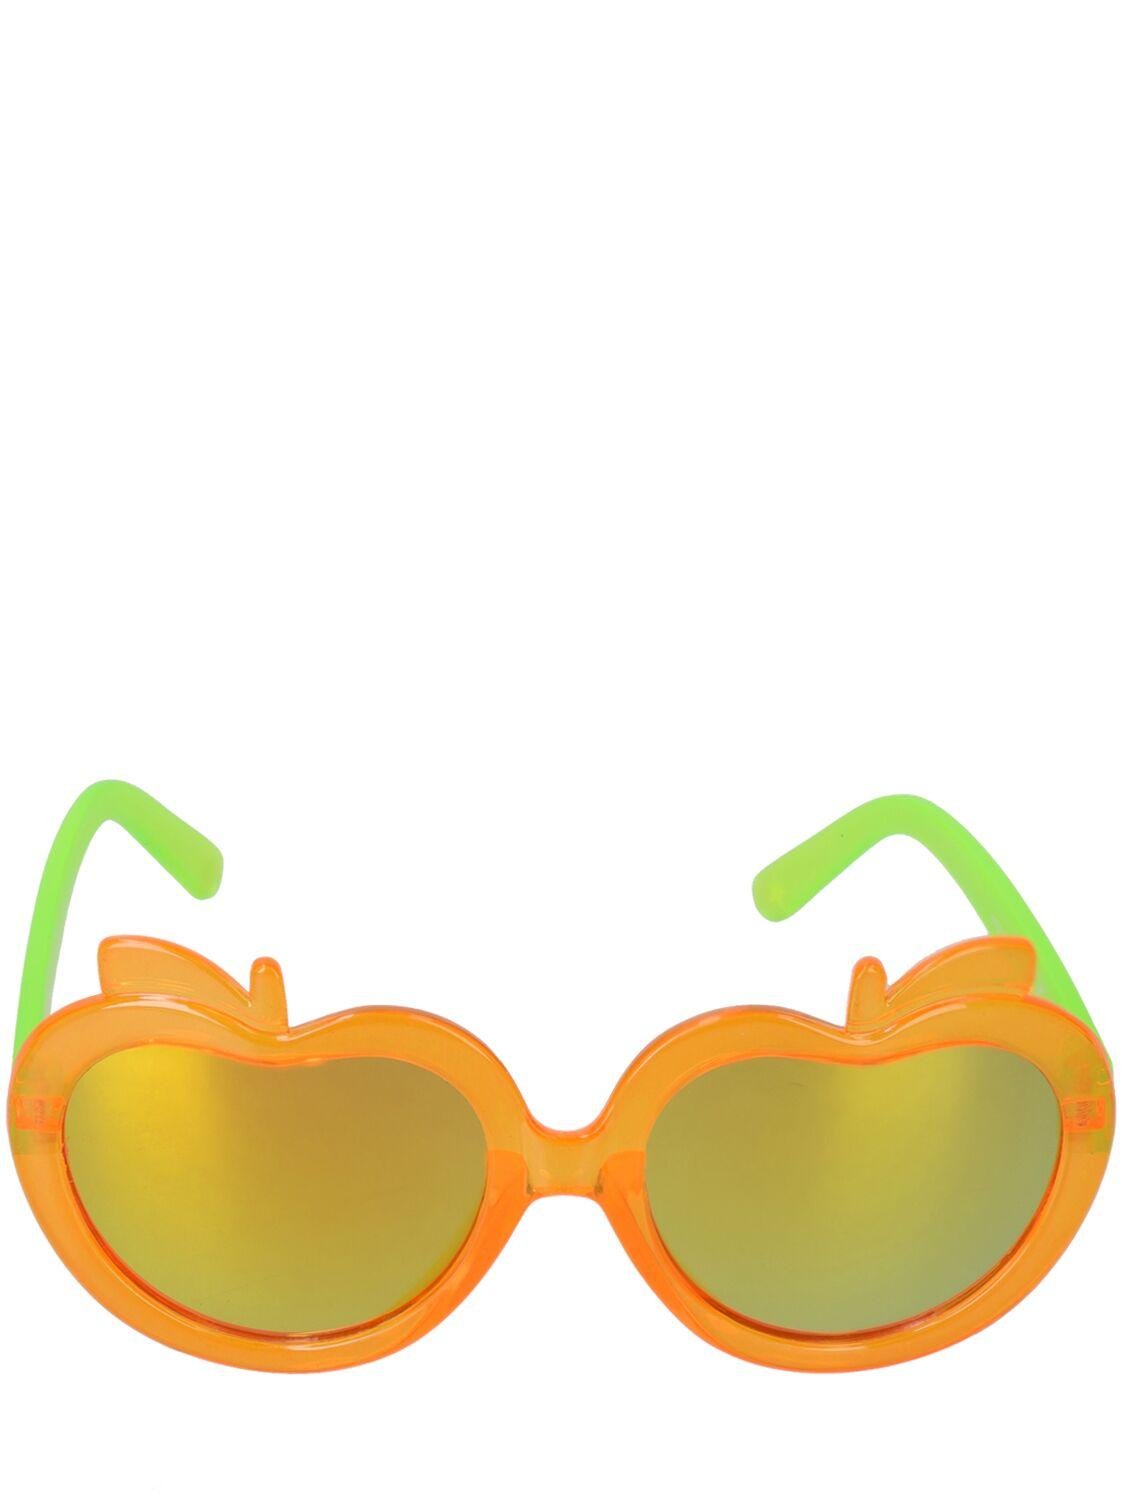 Apple Polycarbonate Sunglasses by MOLO